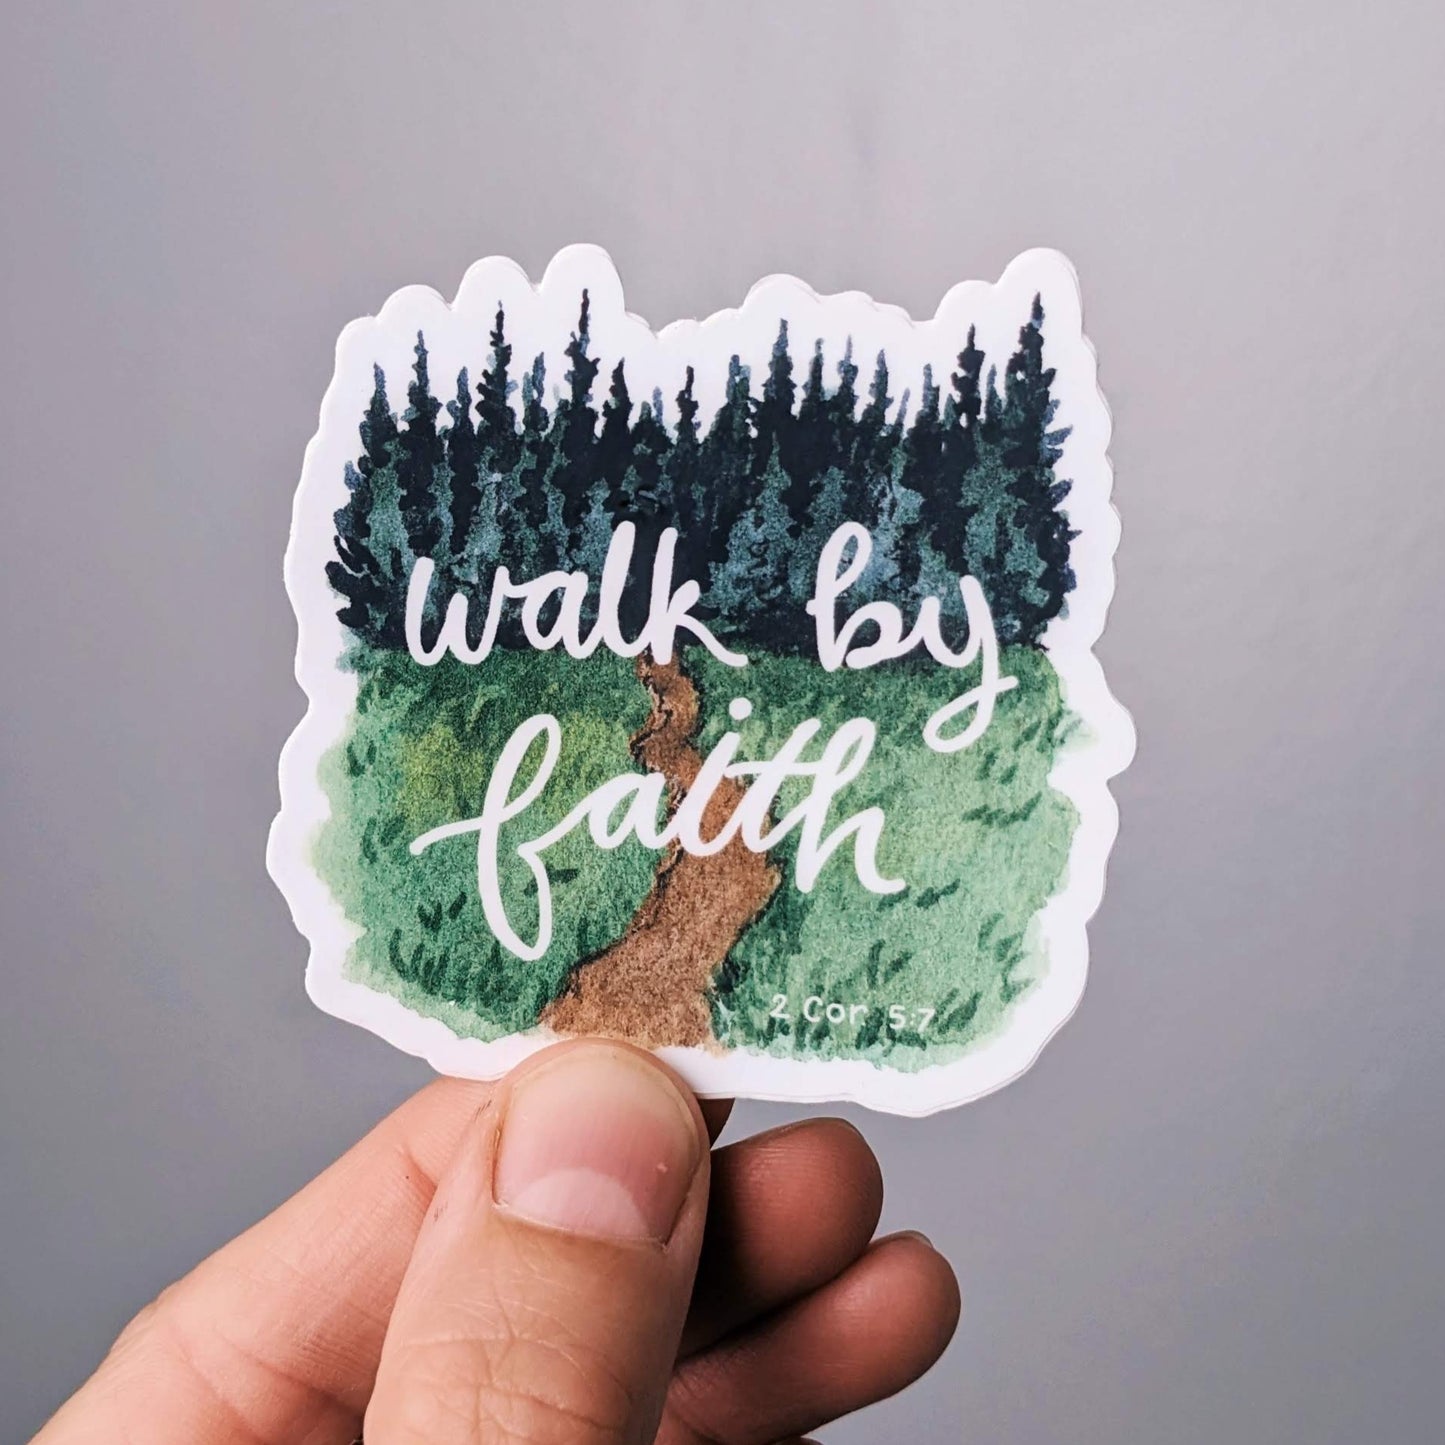 Walk By Faith | Vinyl Sticker - Kim Everhard Art